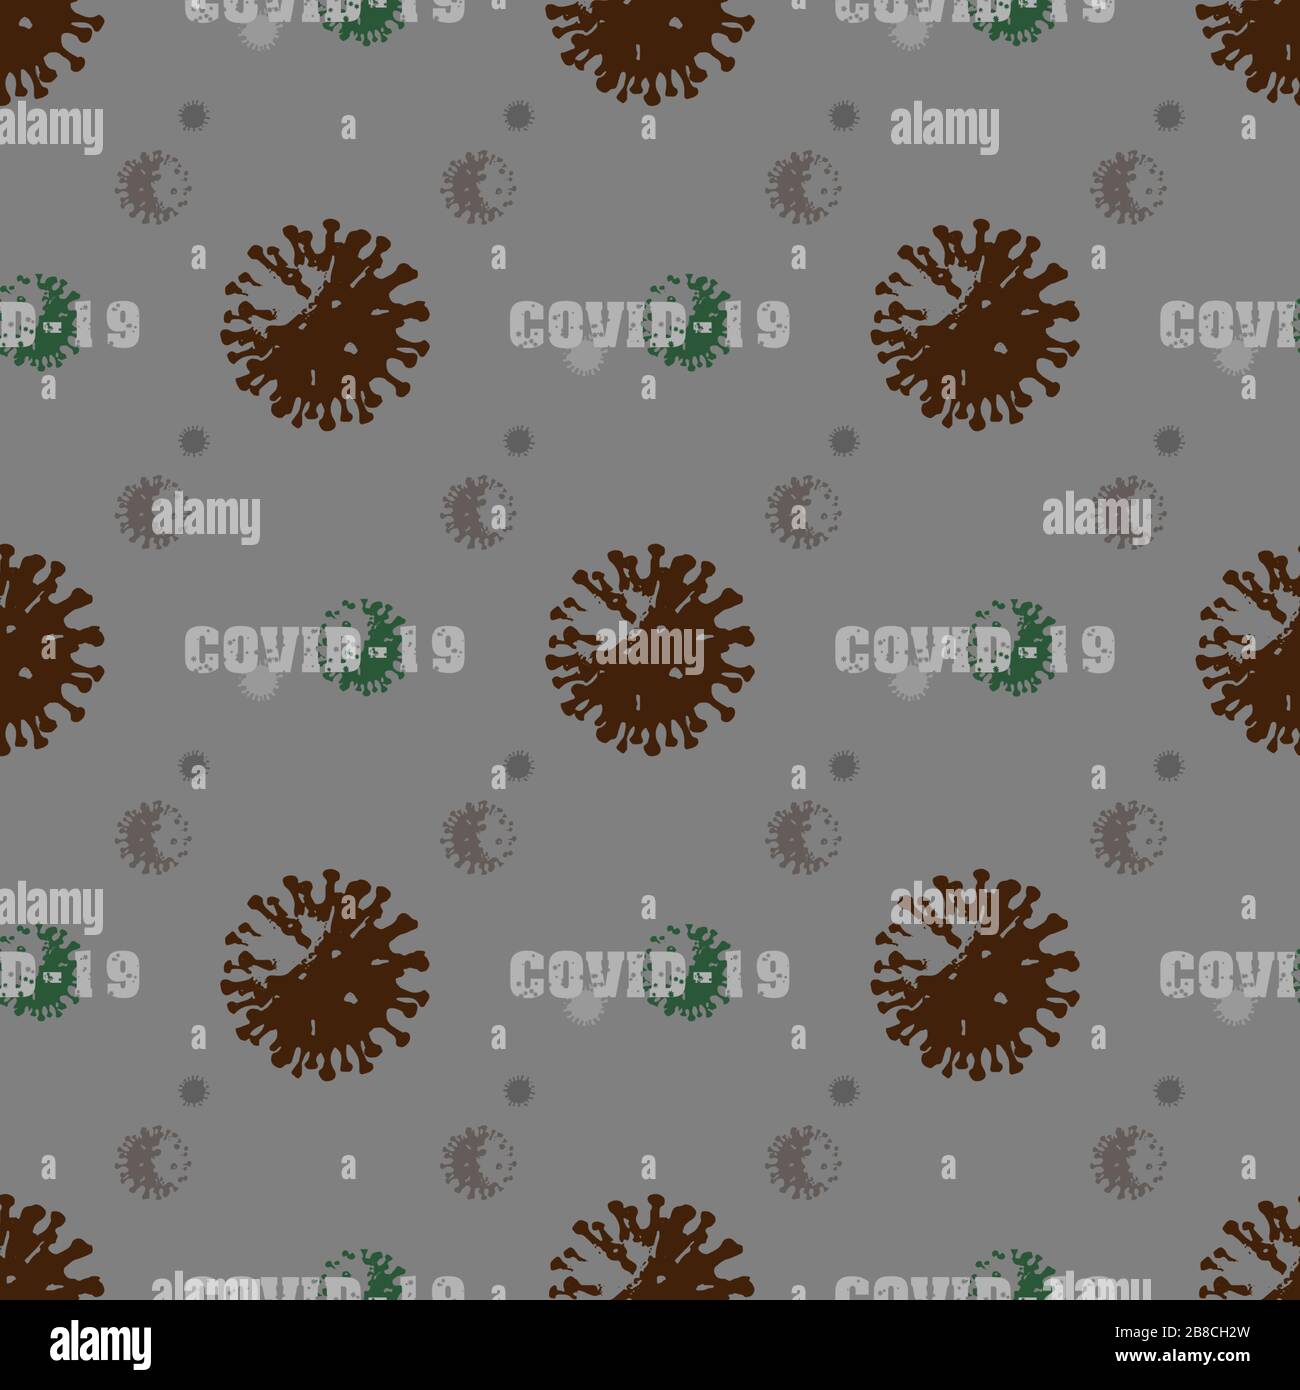 Coronavirus COVID-19 cells seamless pattern vector illustration. Virus bacteria background Stock Vector